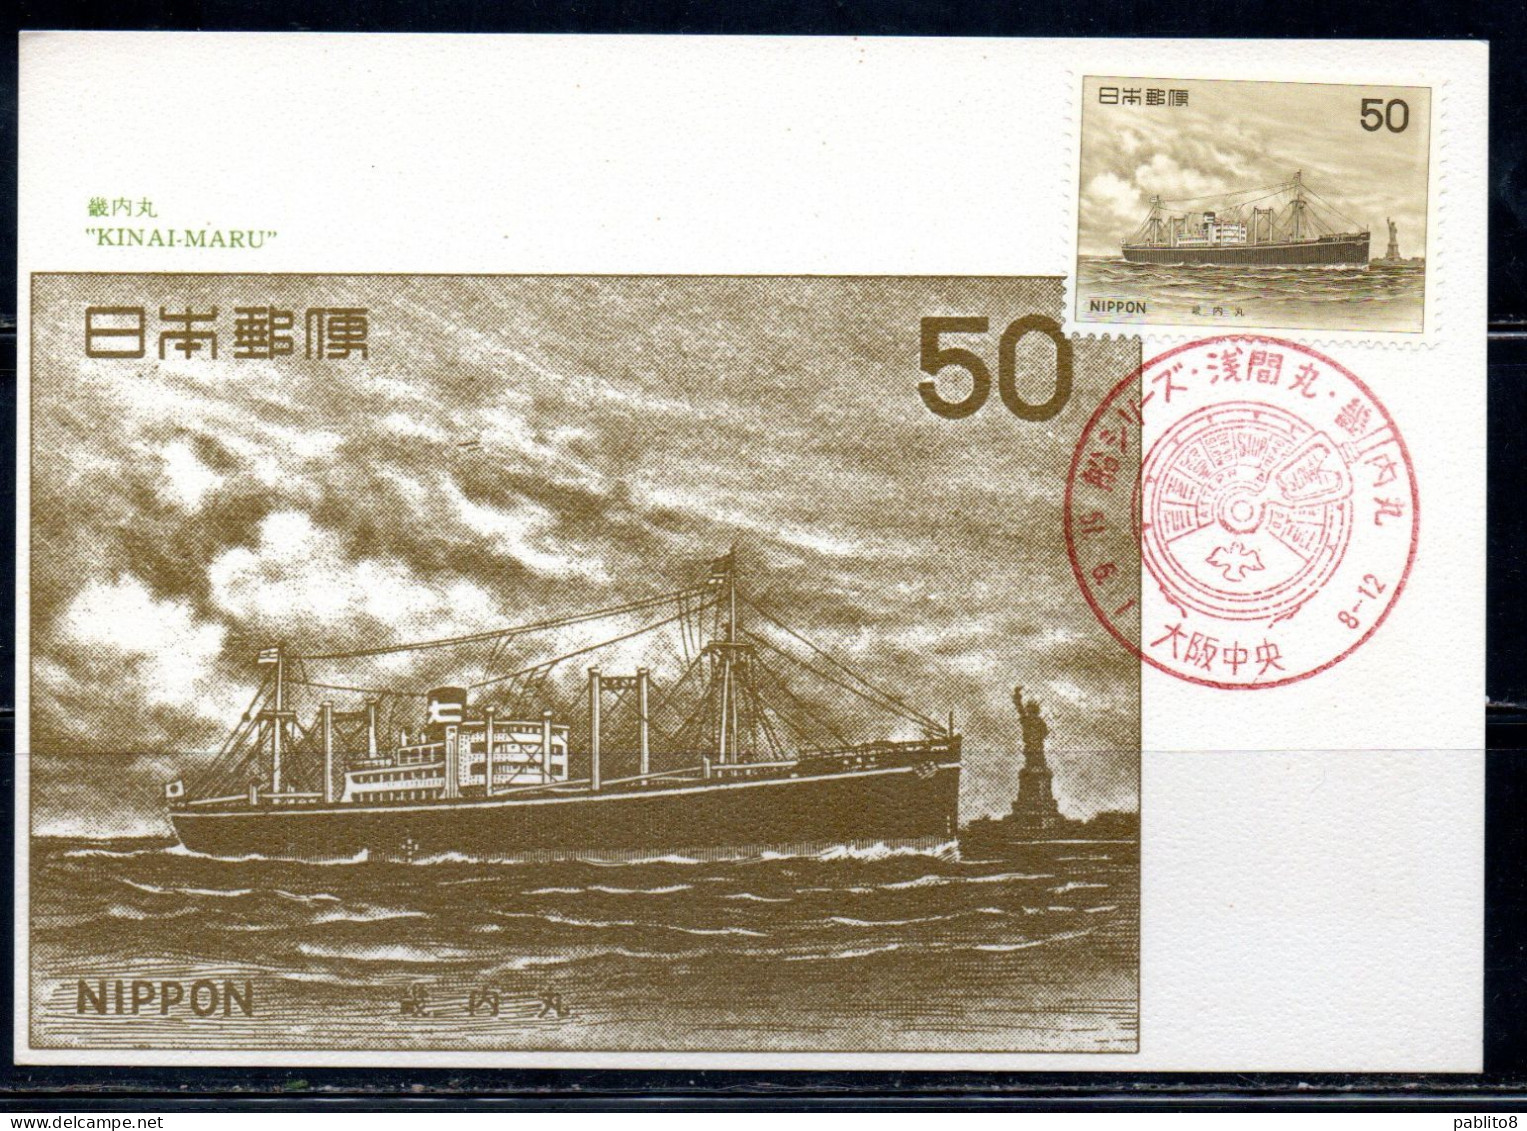 JAPAN GIAPPONE 1975 1976 HISTORIC SHIPS ISSUE KINAI-MARU SHIP 50y MAXI MAXIMUM CARD - Cartoline Maximum